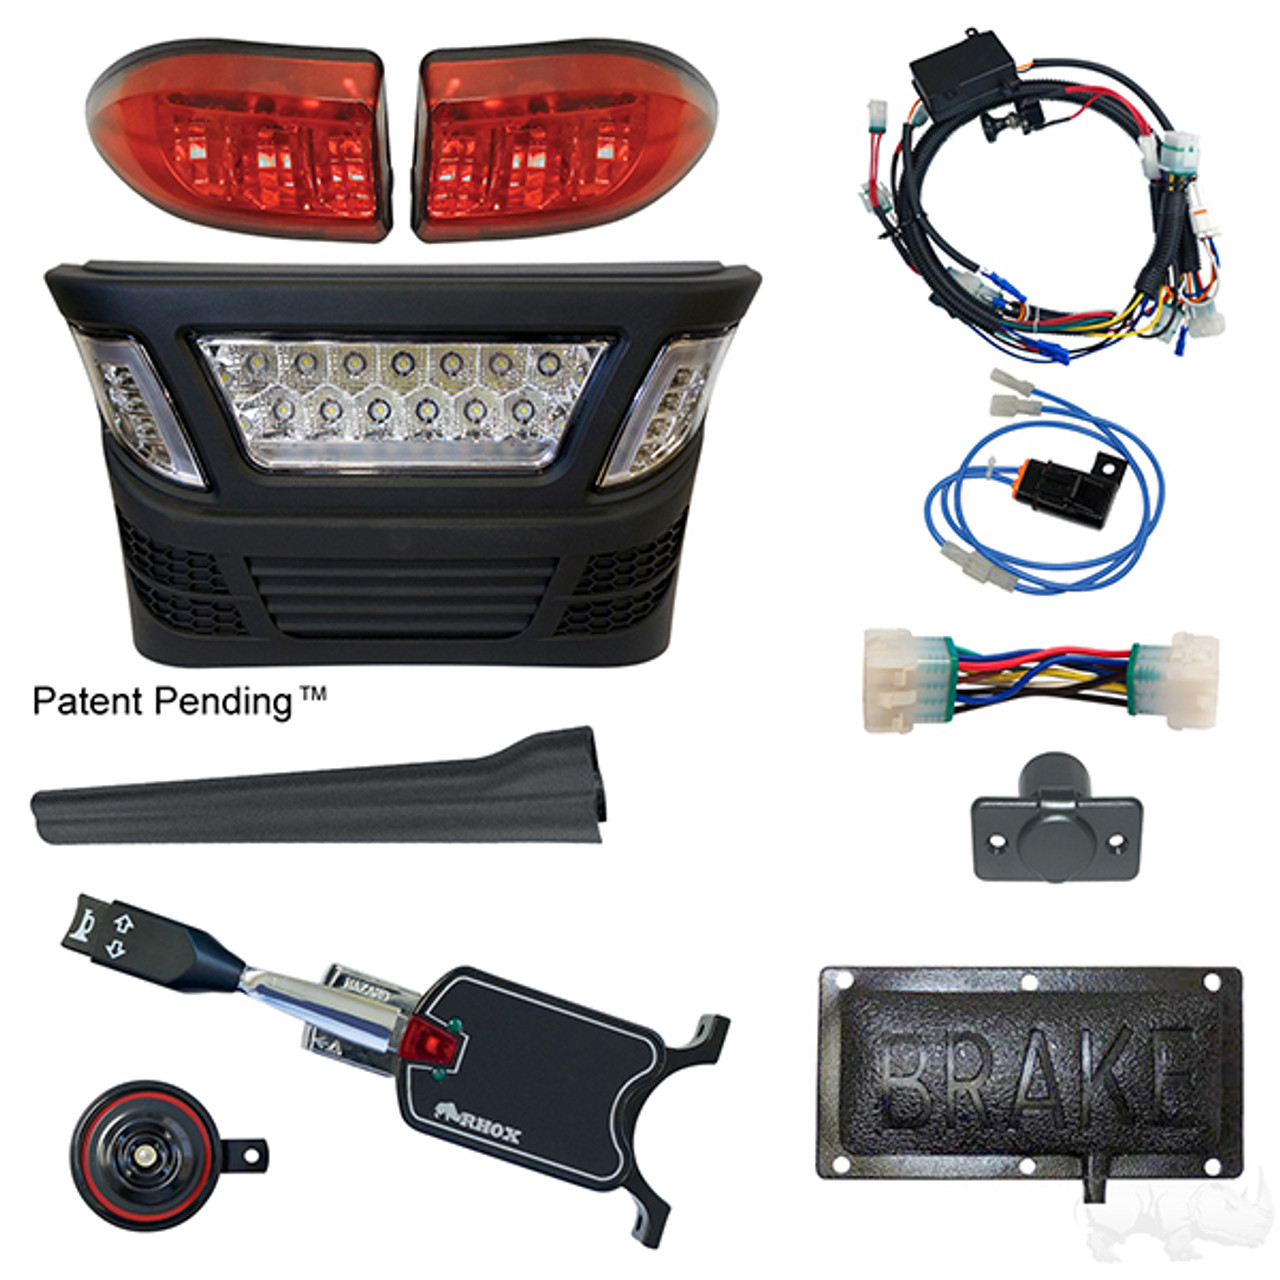 Standard LED Light Bar Kit for Club Car Precedent 2004-Up 12-48V Golf Cart, LGT-340LT2B1